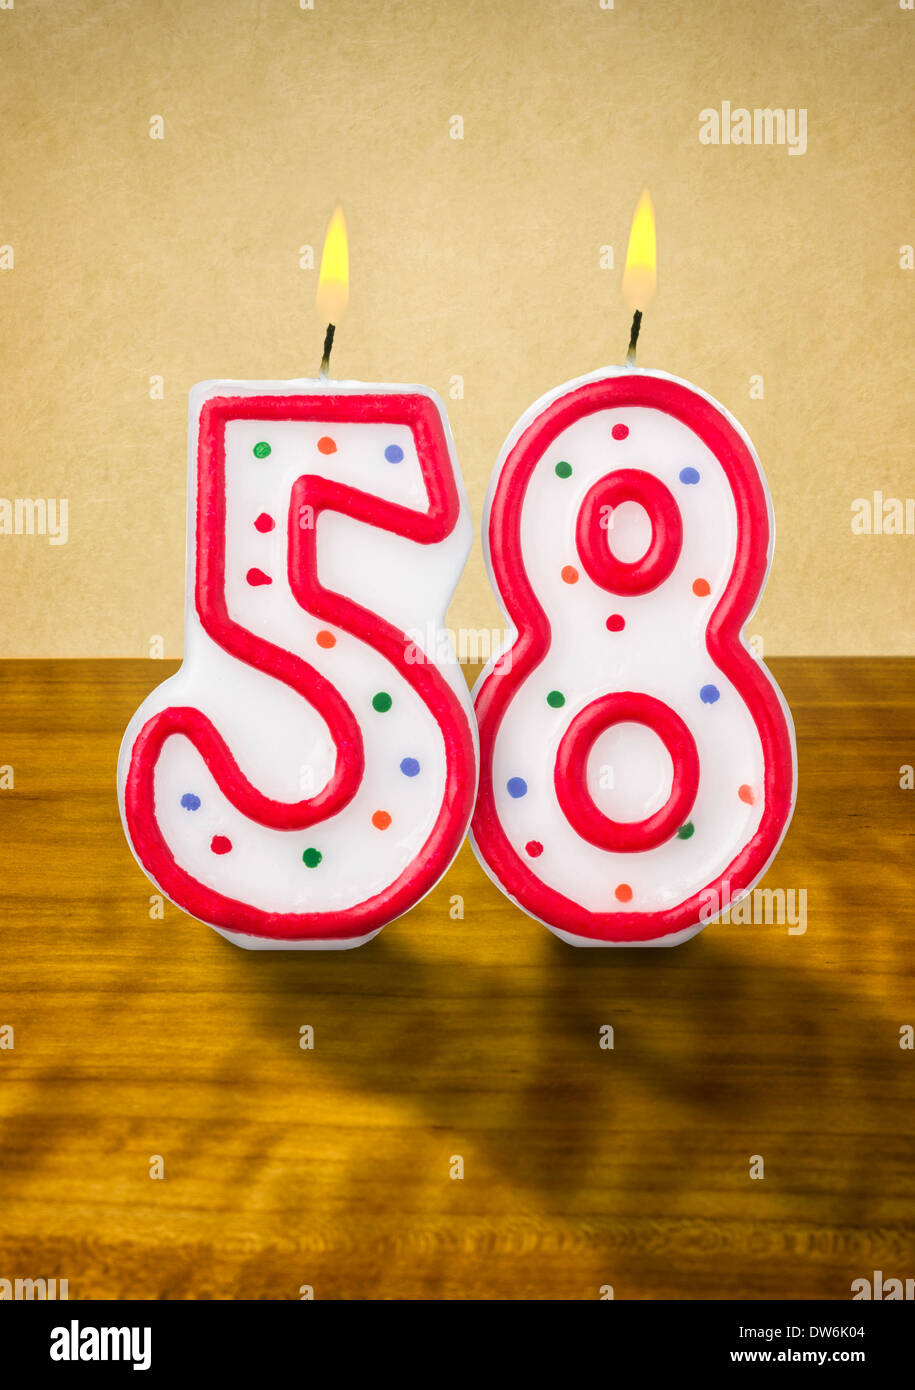 Burning birthday candles number 58 Stock Photo - Alamy